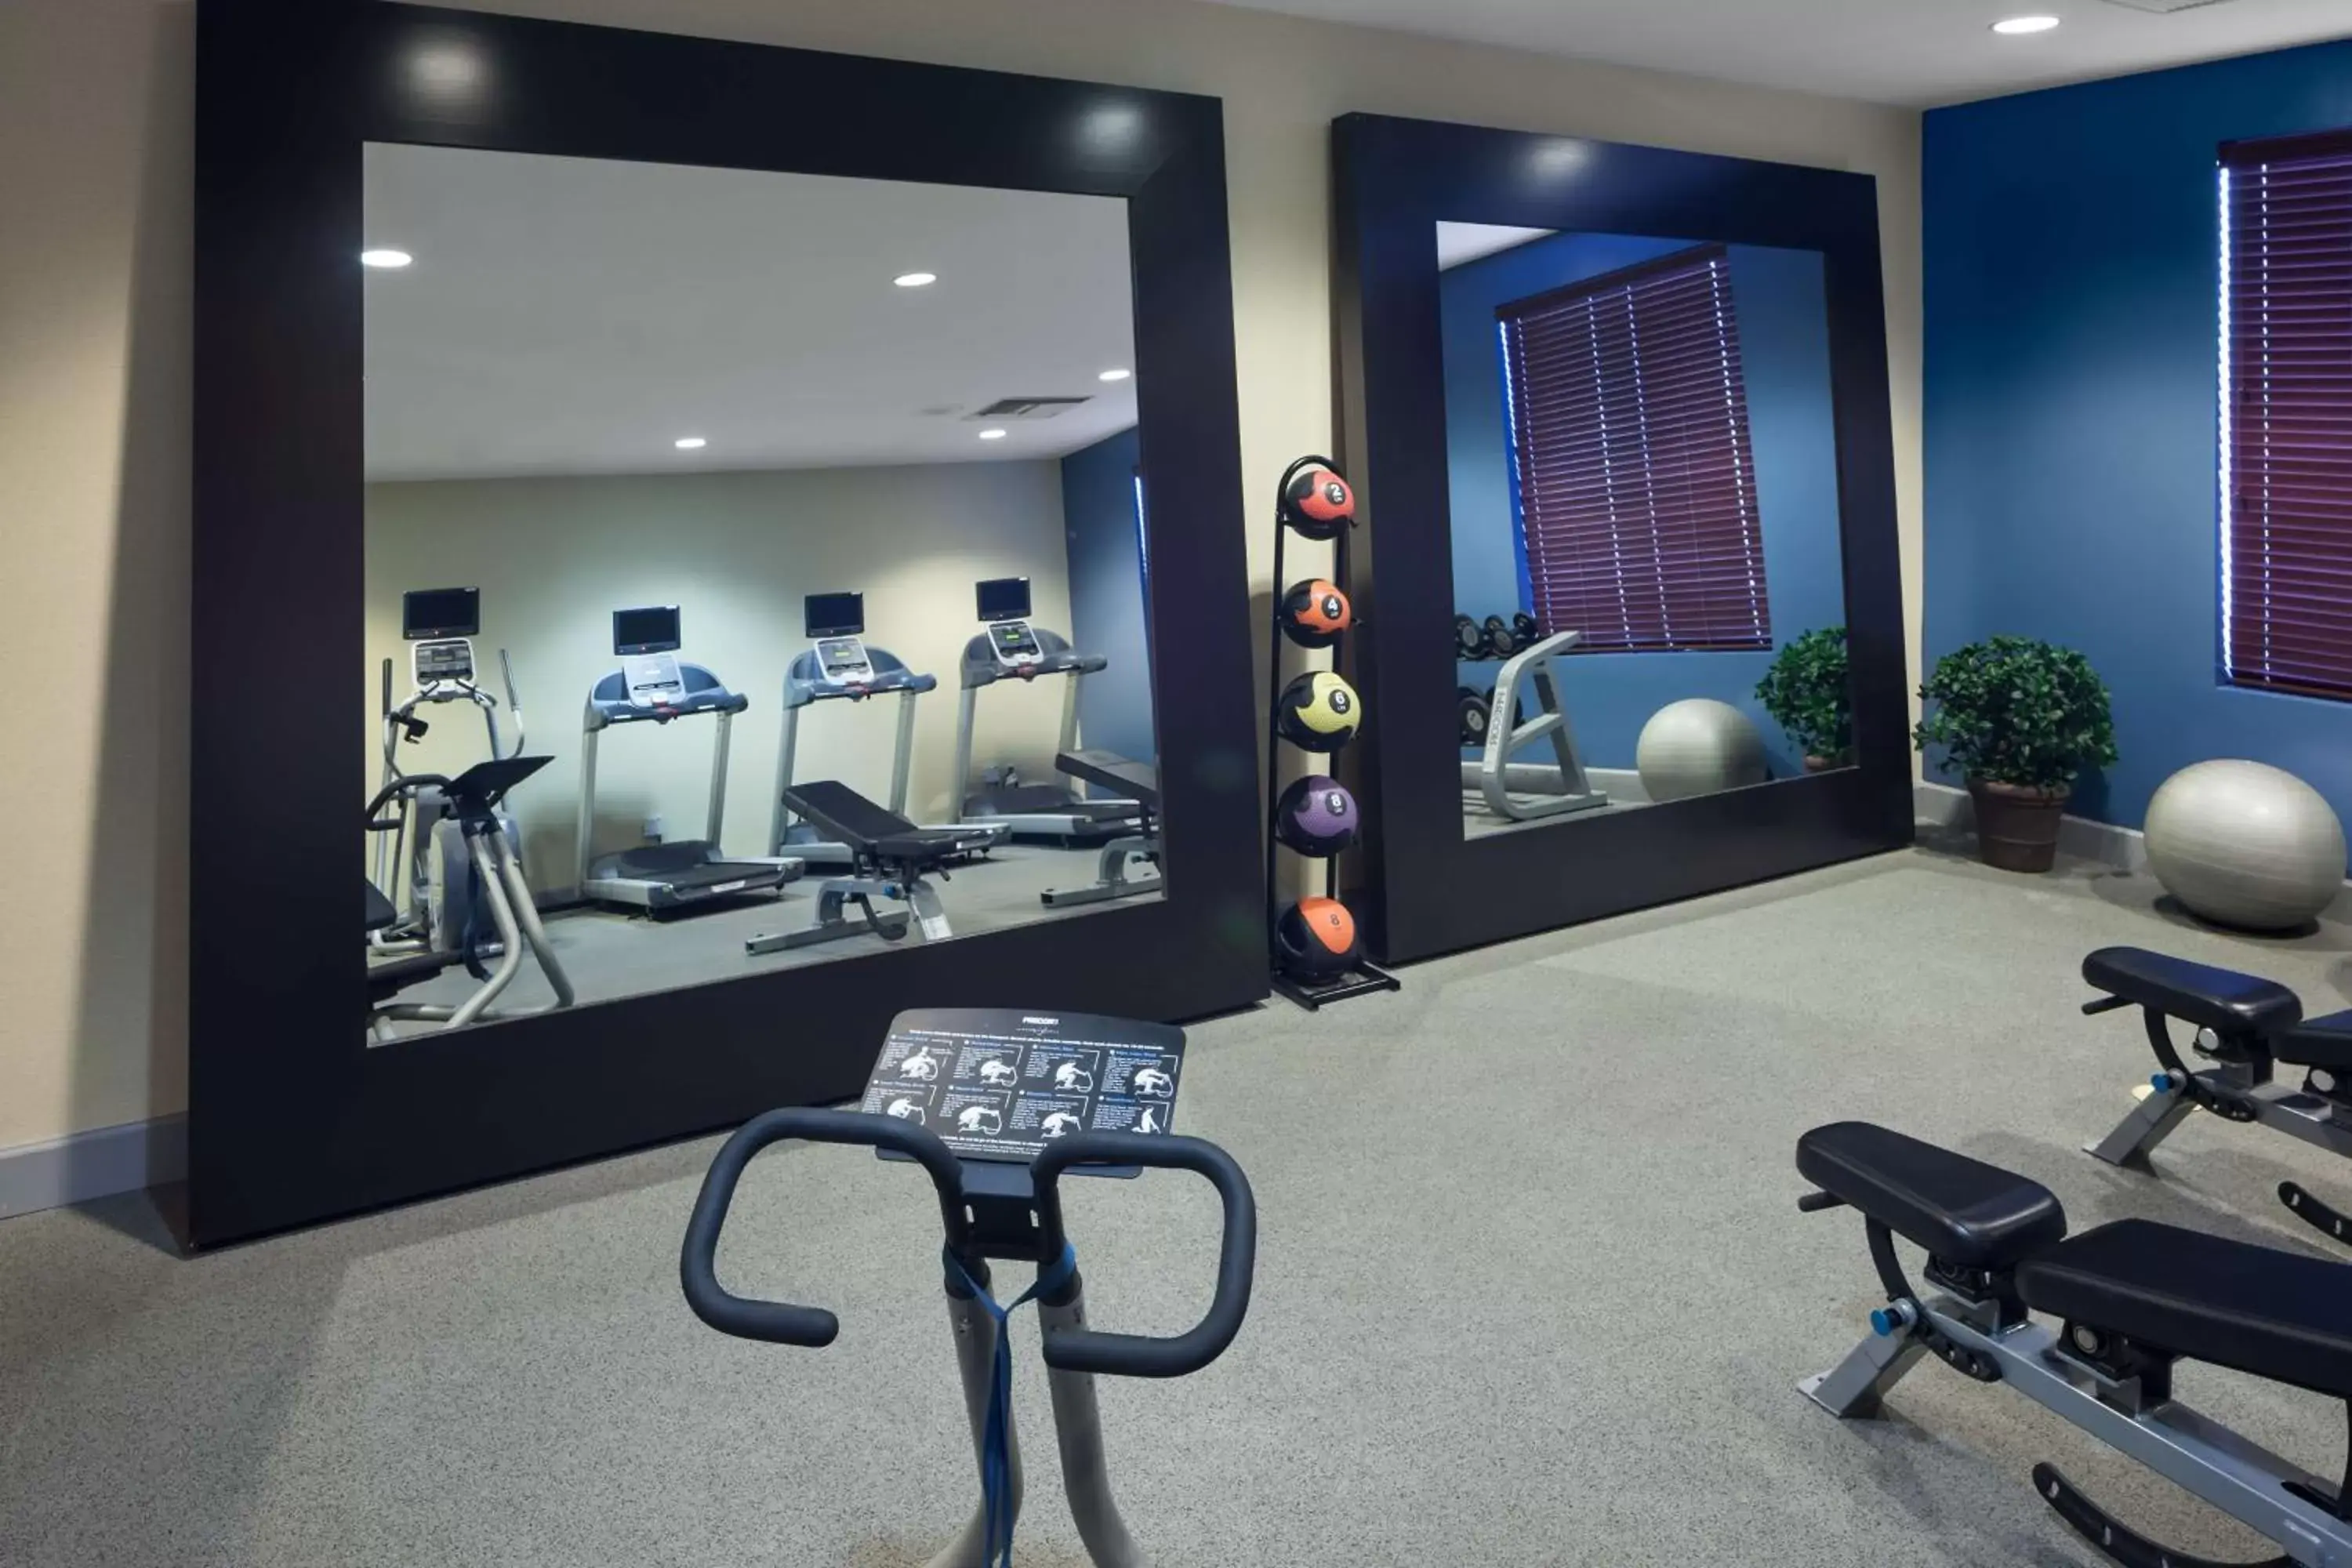 Fitness centre/facilities, Fitness Center/Facilities in Hilton Garden Inn Tucson Airport